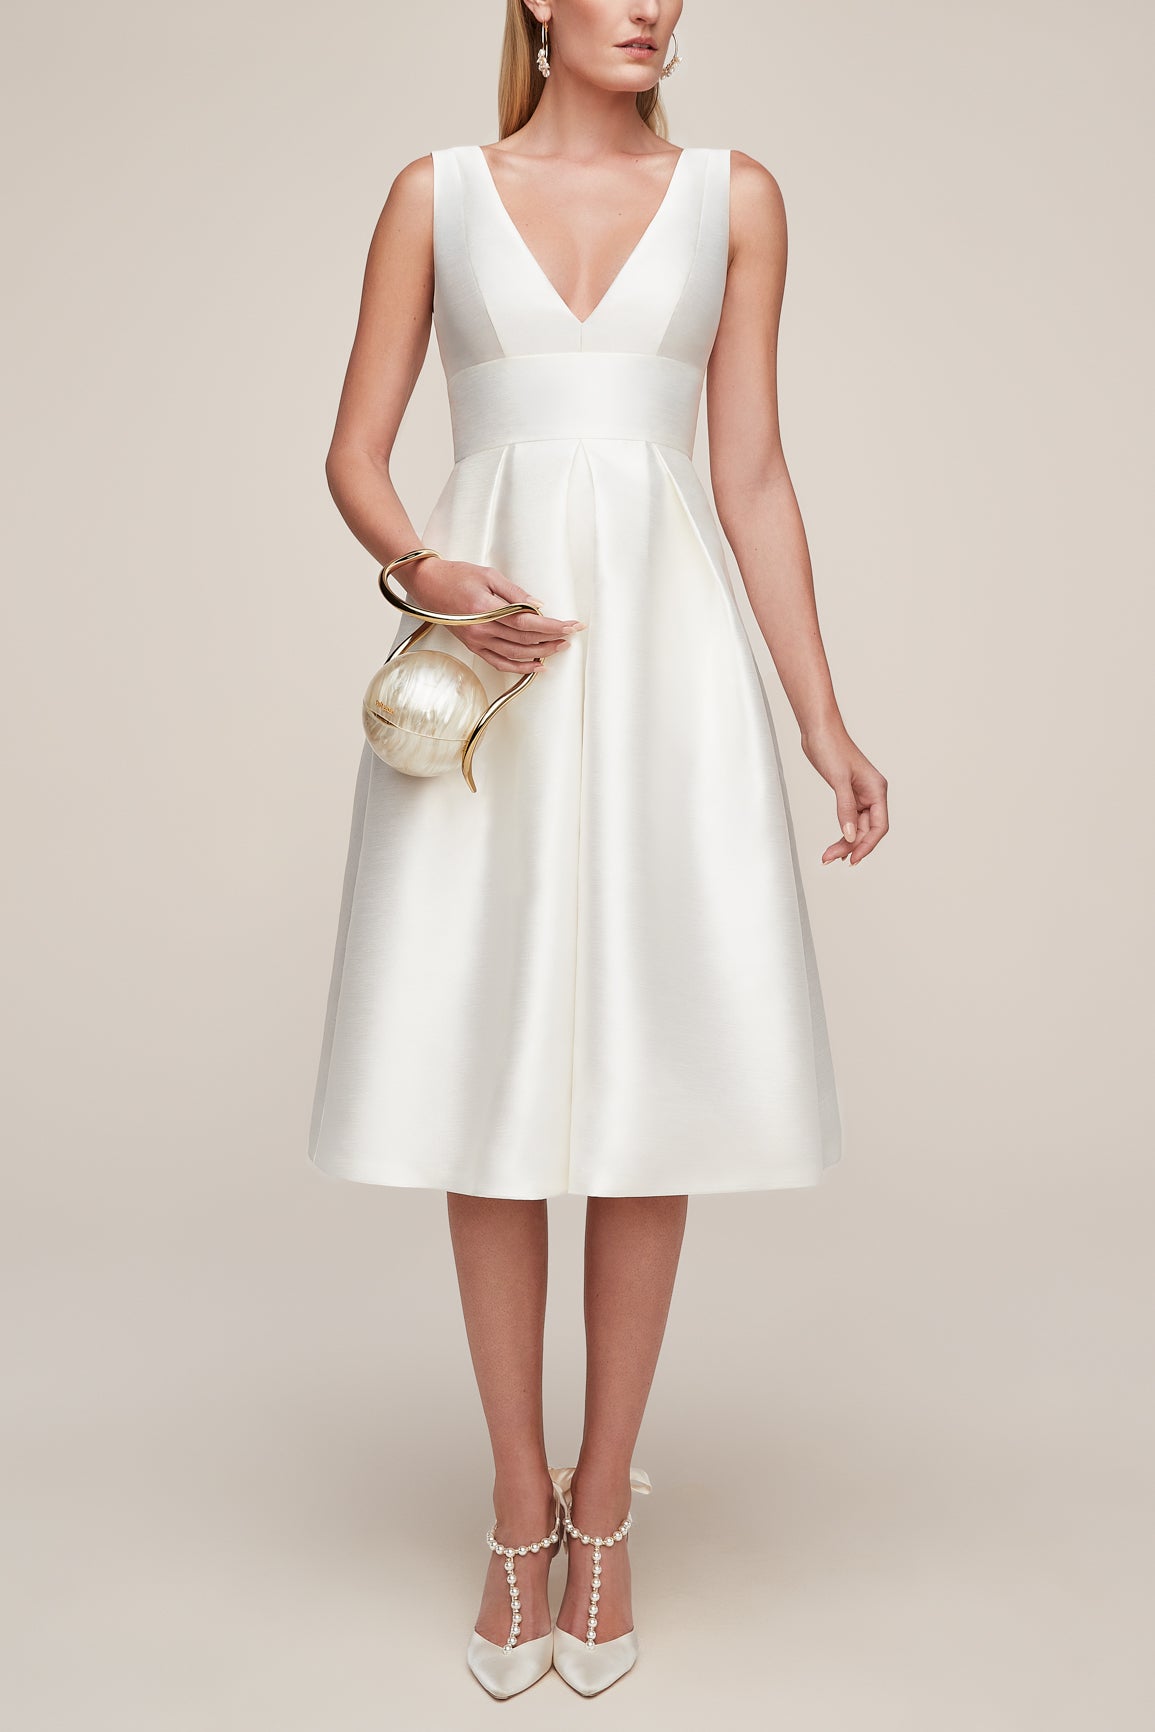 classic white dress